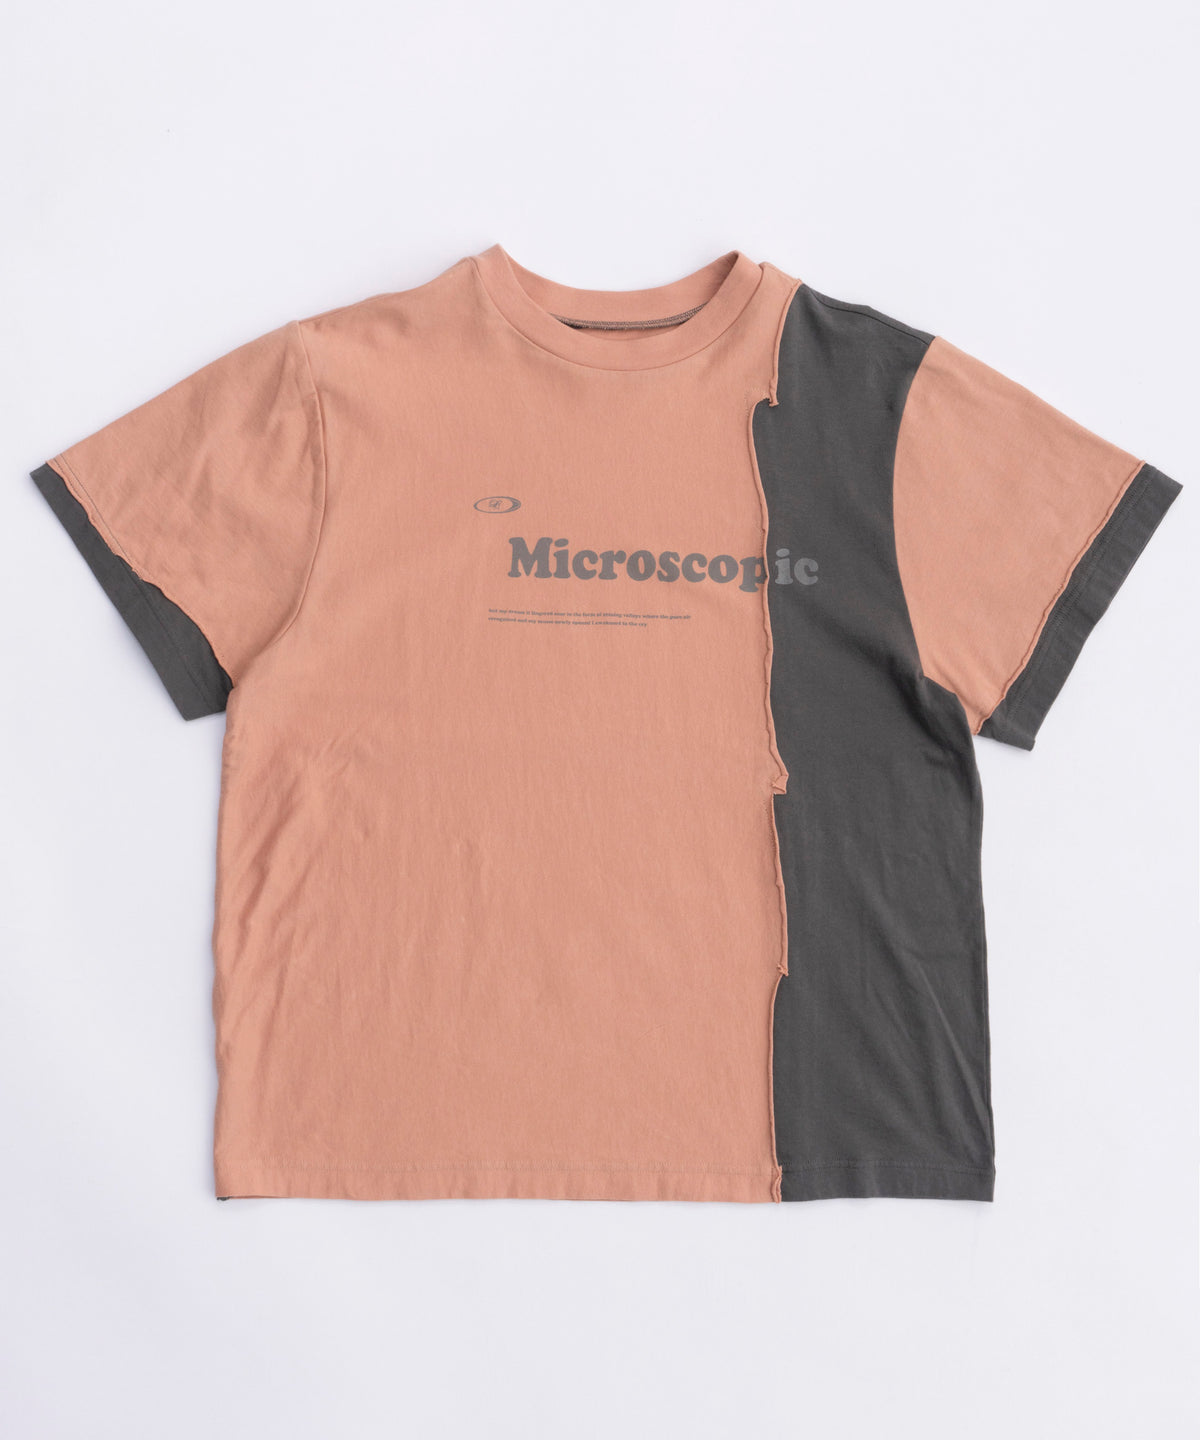 【SALE】Microscopic T-shirt